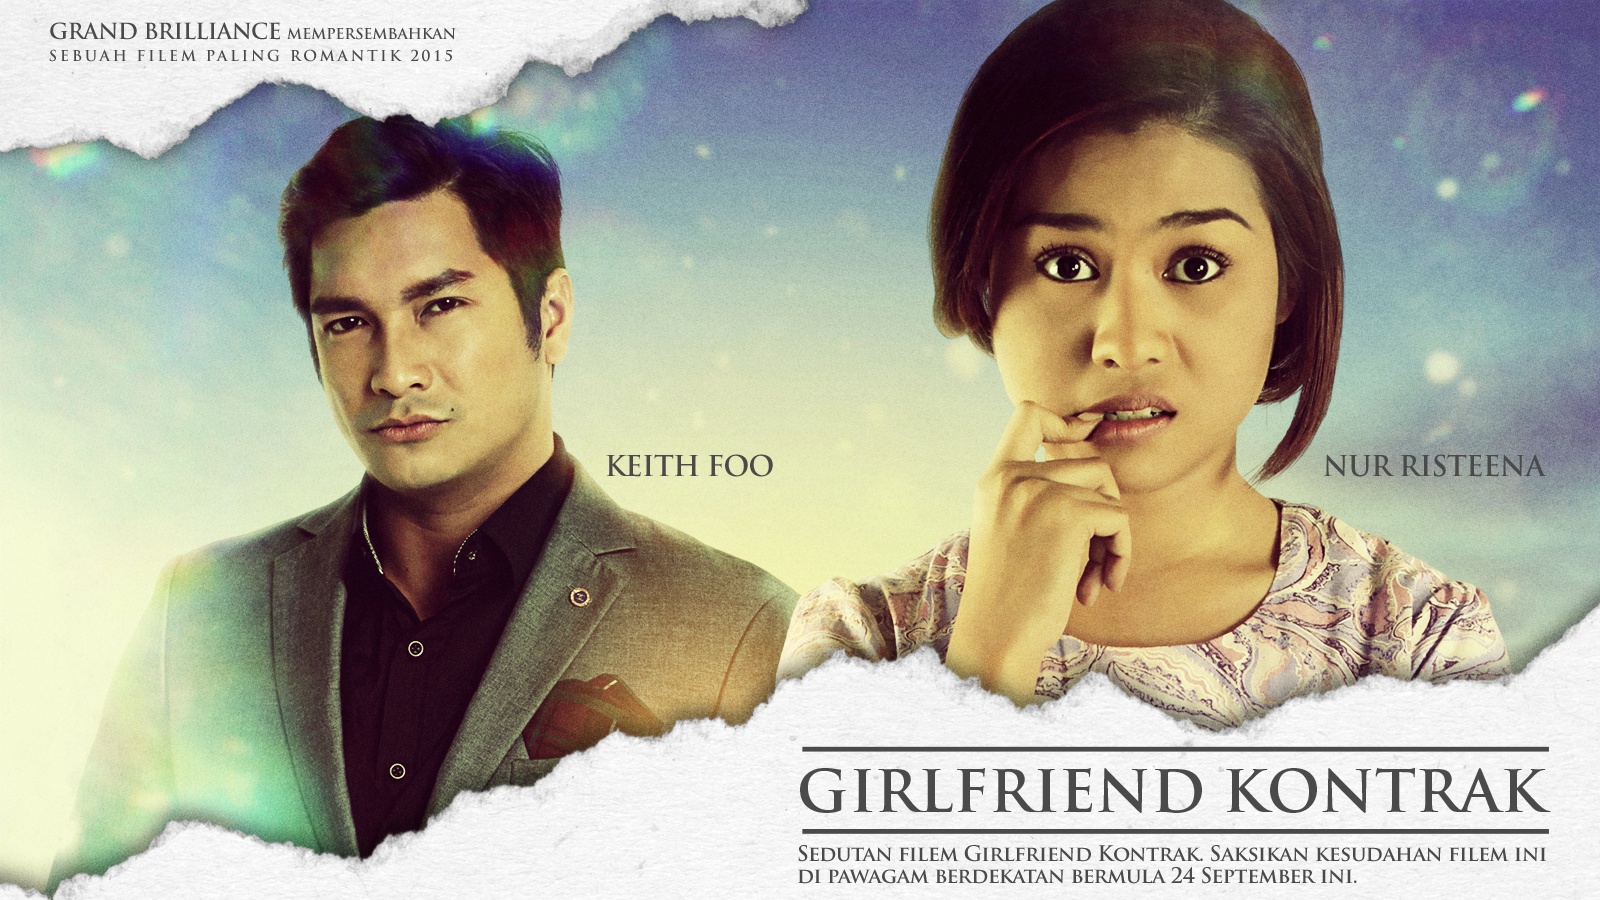 Sinopsis Filem Girlfriend Kontrak Lakonan Keith Foo ~ Miss 